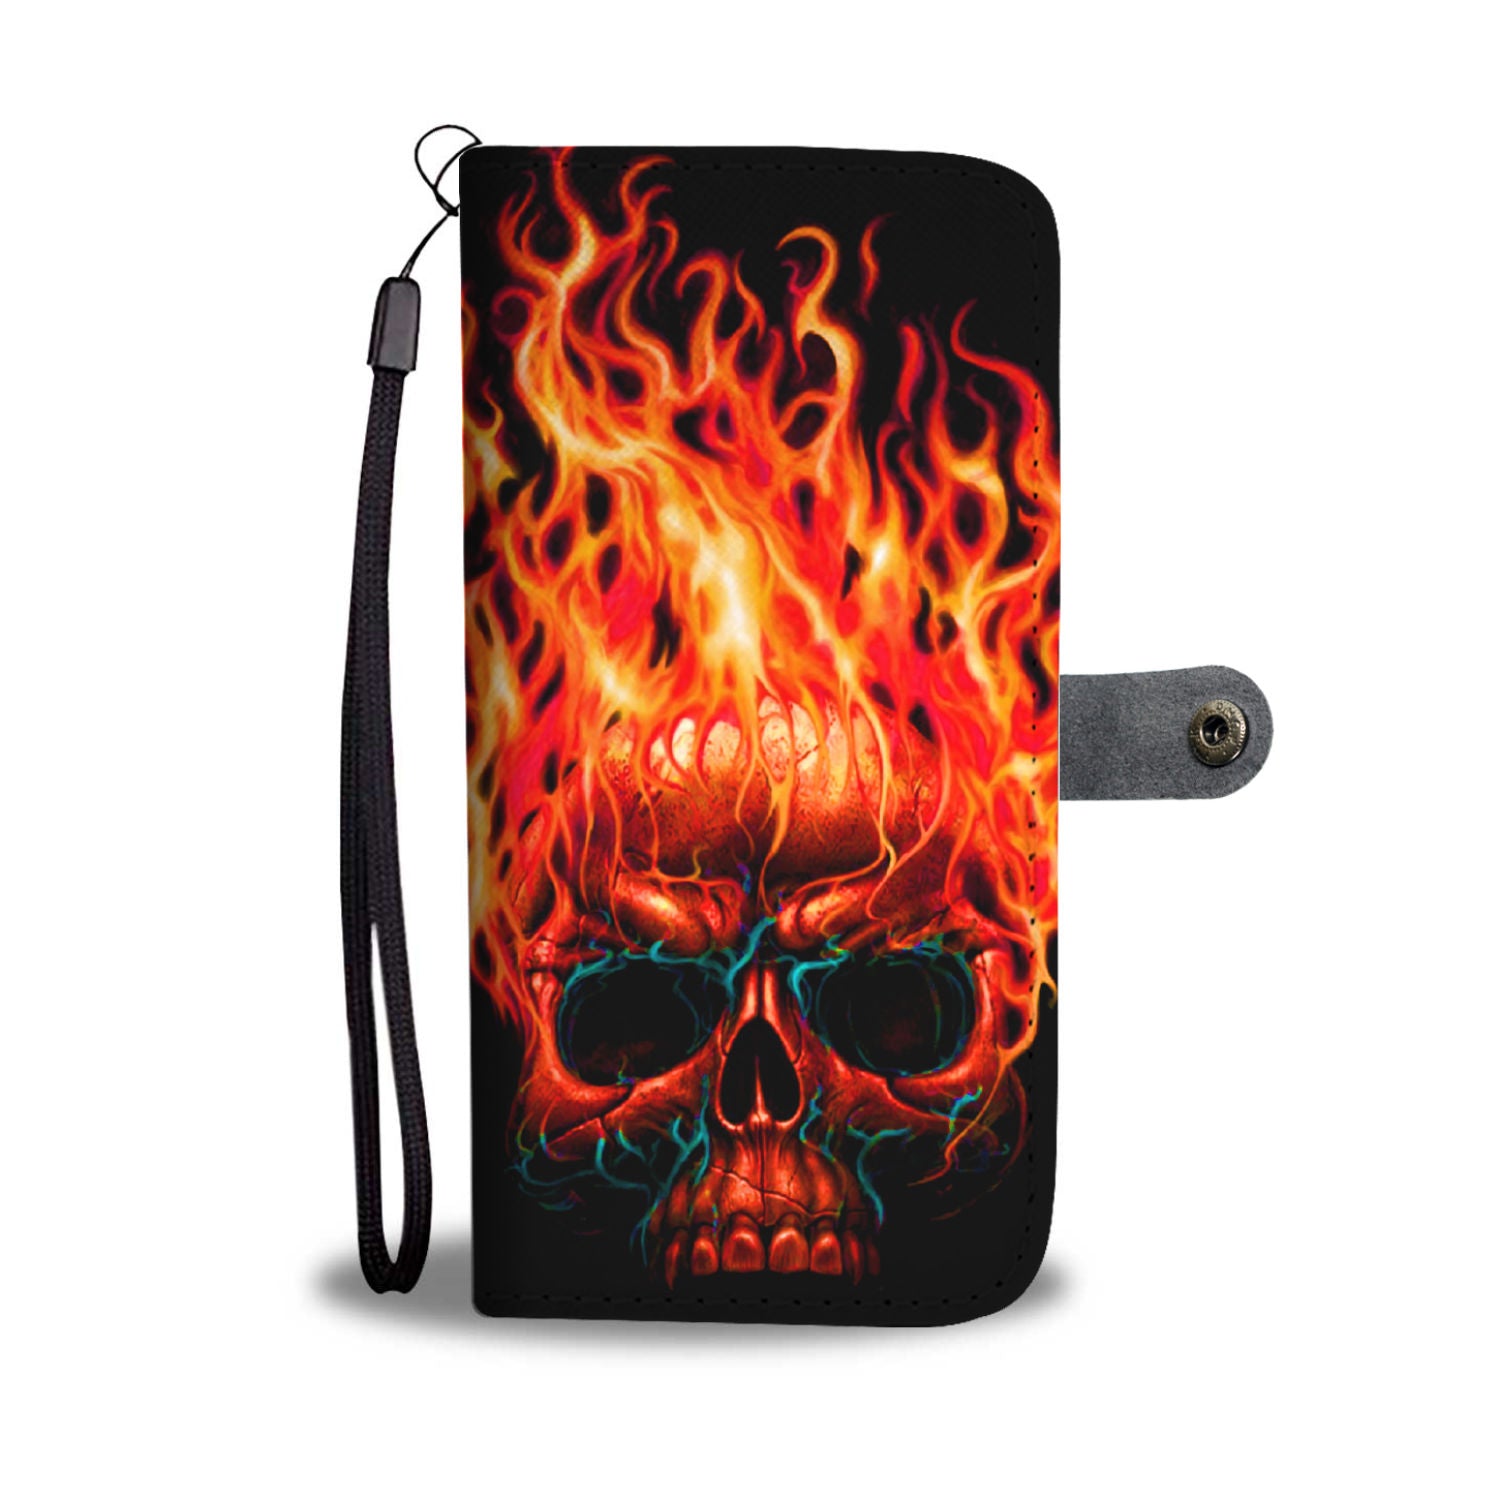 Skull fire wallet phone case